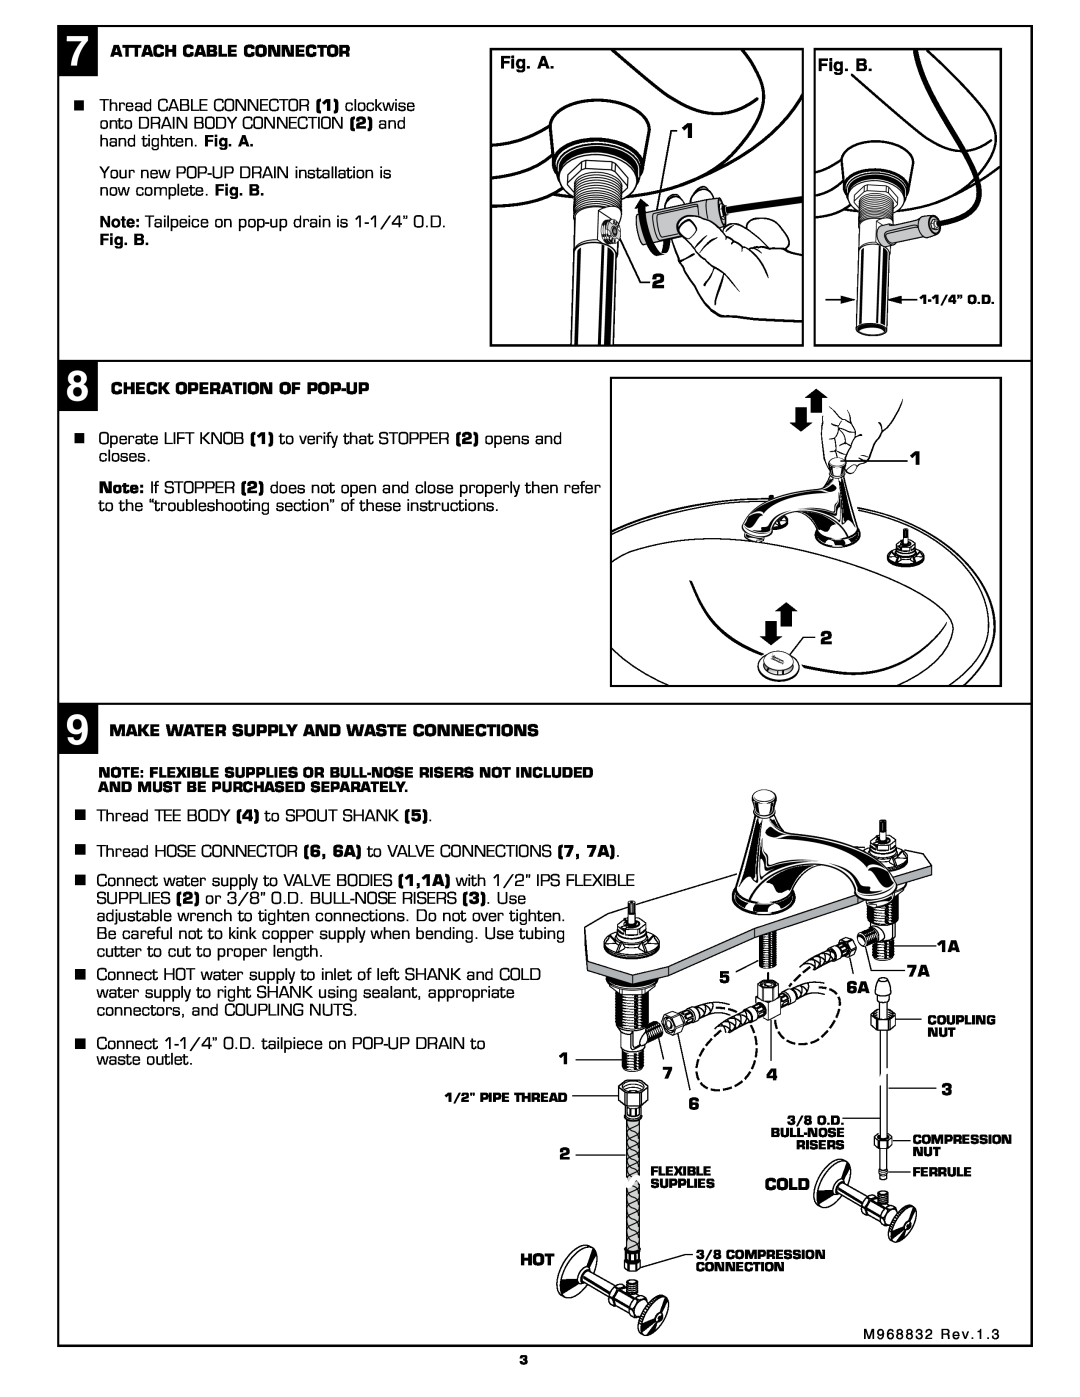 American Standard 4508.801 installation instructions Fig. A, Fig. B 